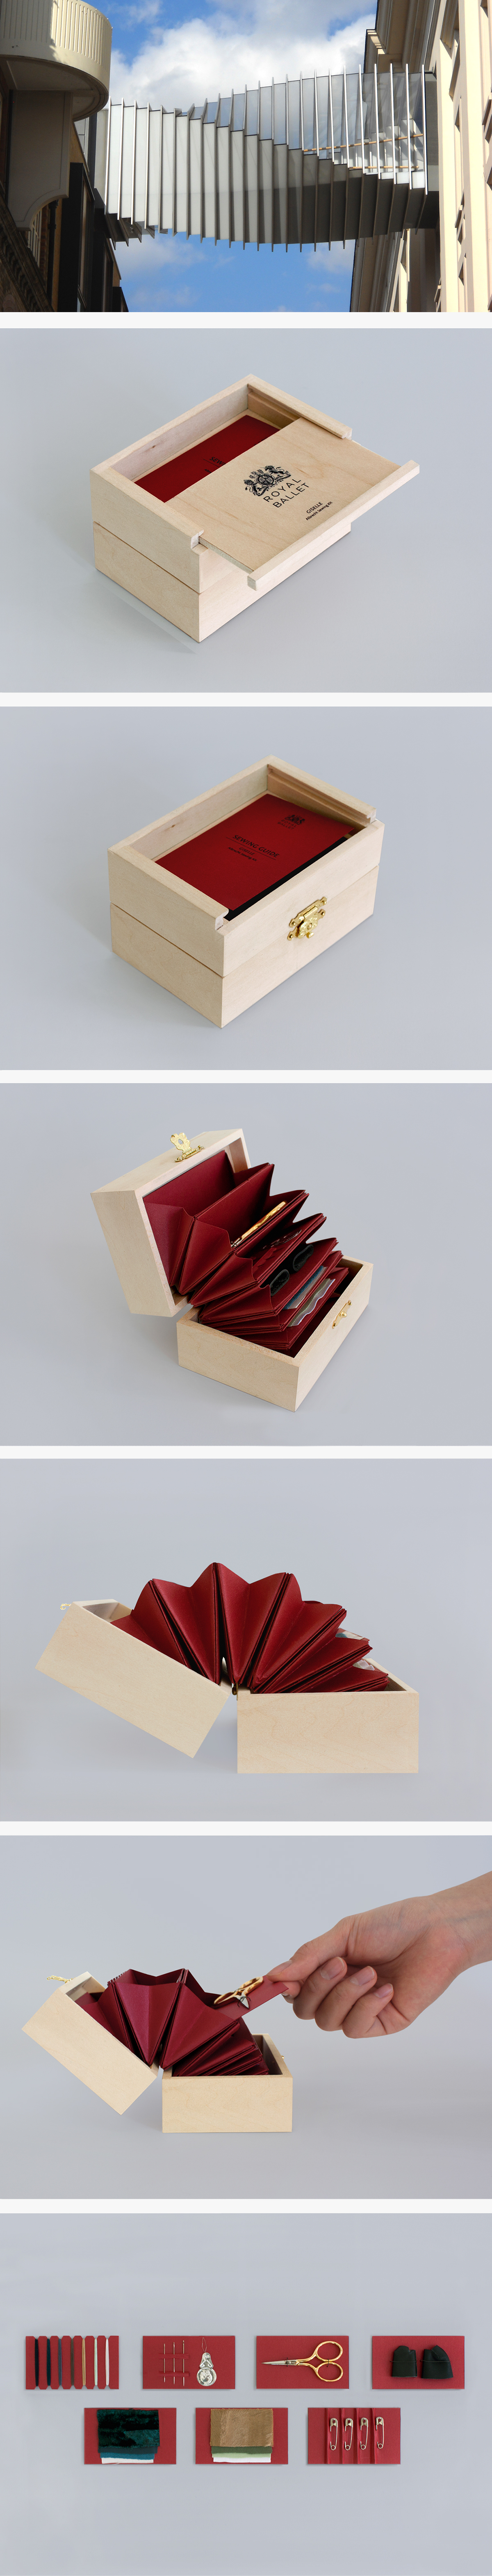 sewing kit ballet box Twist origami  fabric bridge